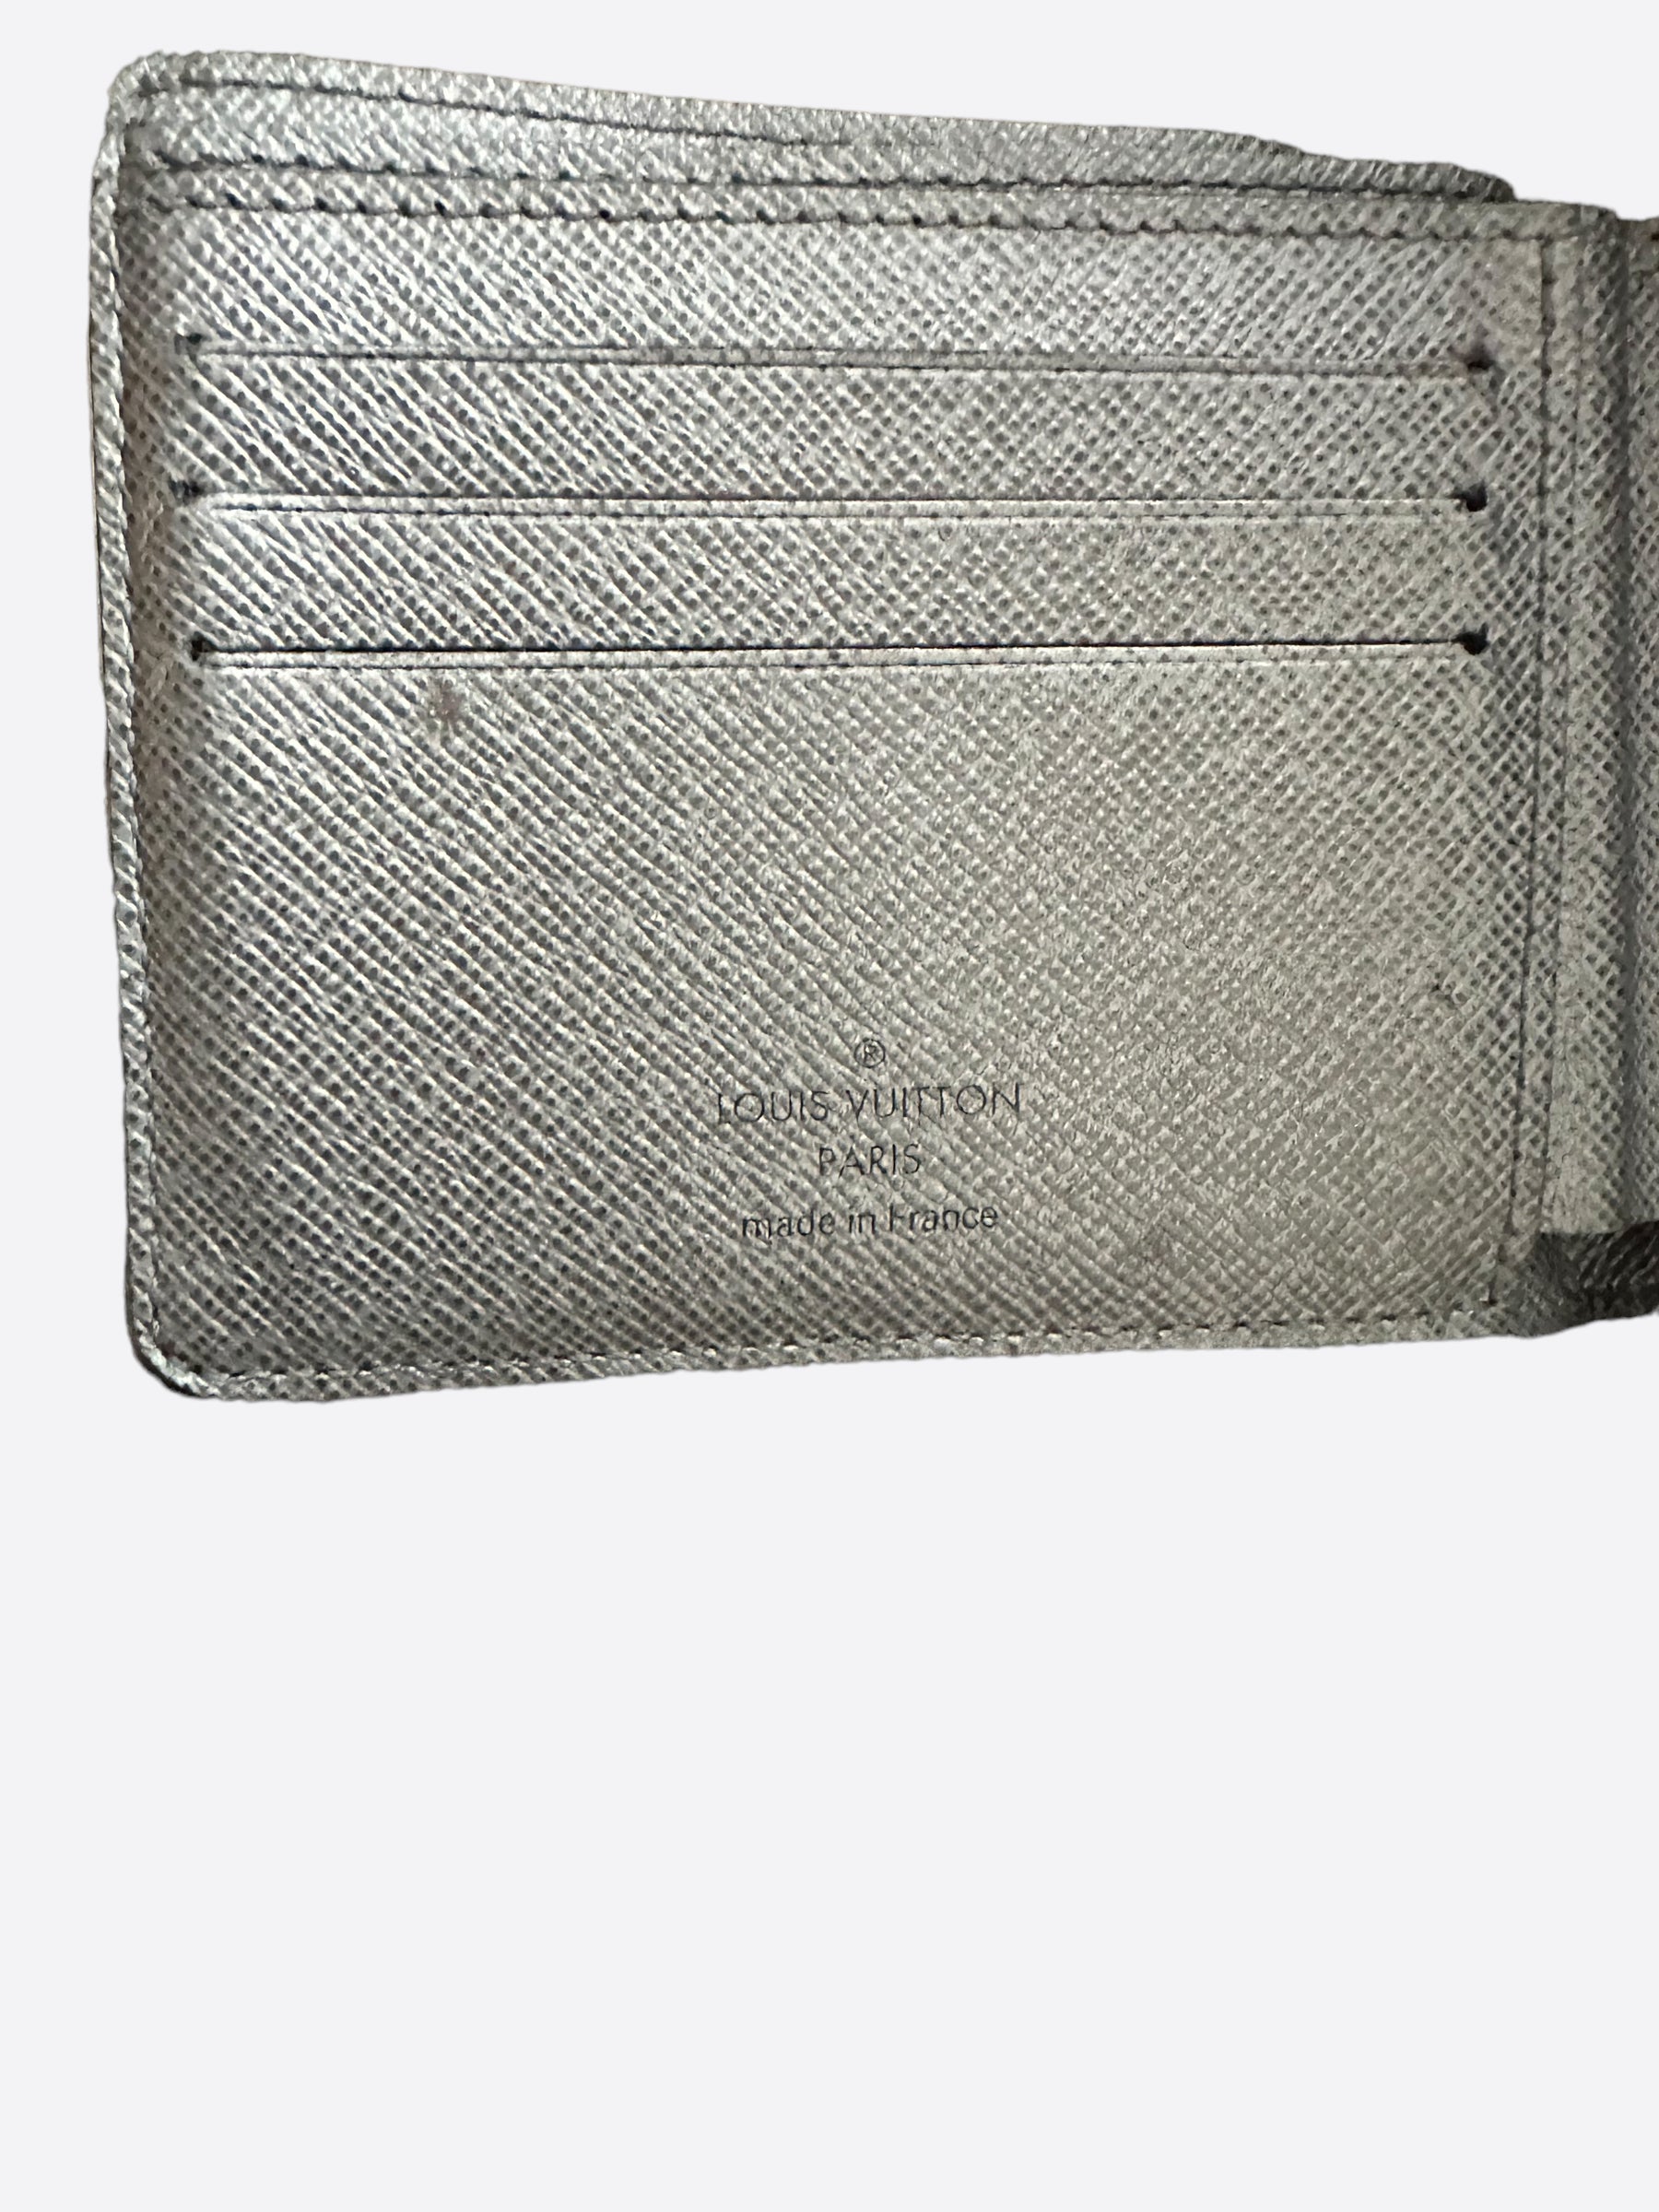 Louis Vuitton Coin Card Holder Gunmetal Grey in Calfskin Leather - US